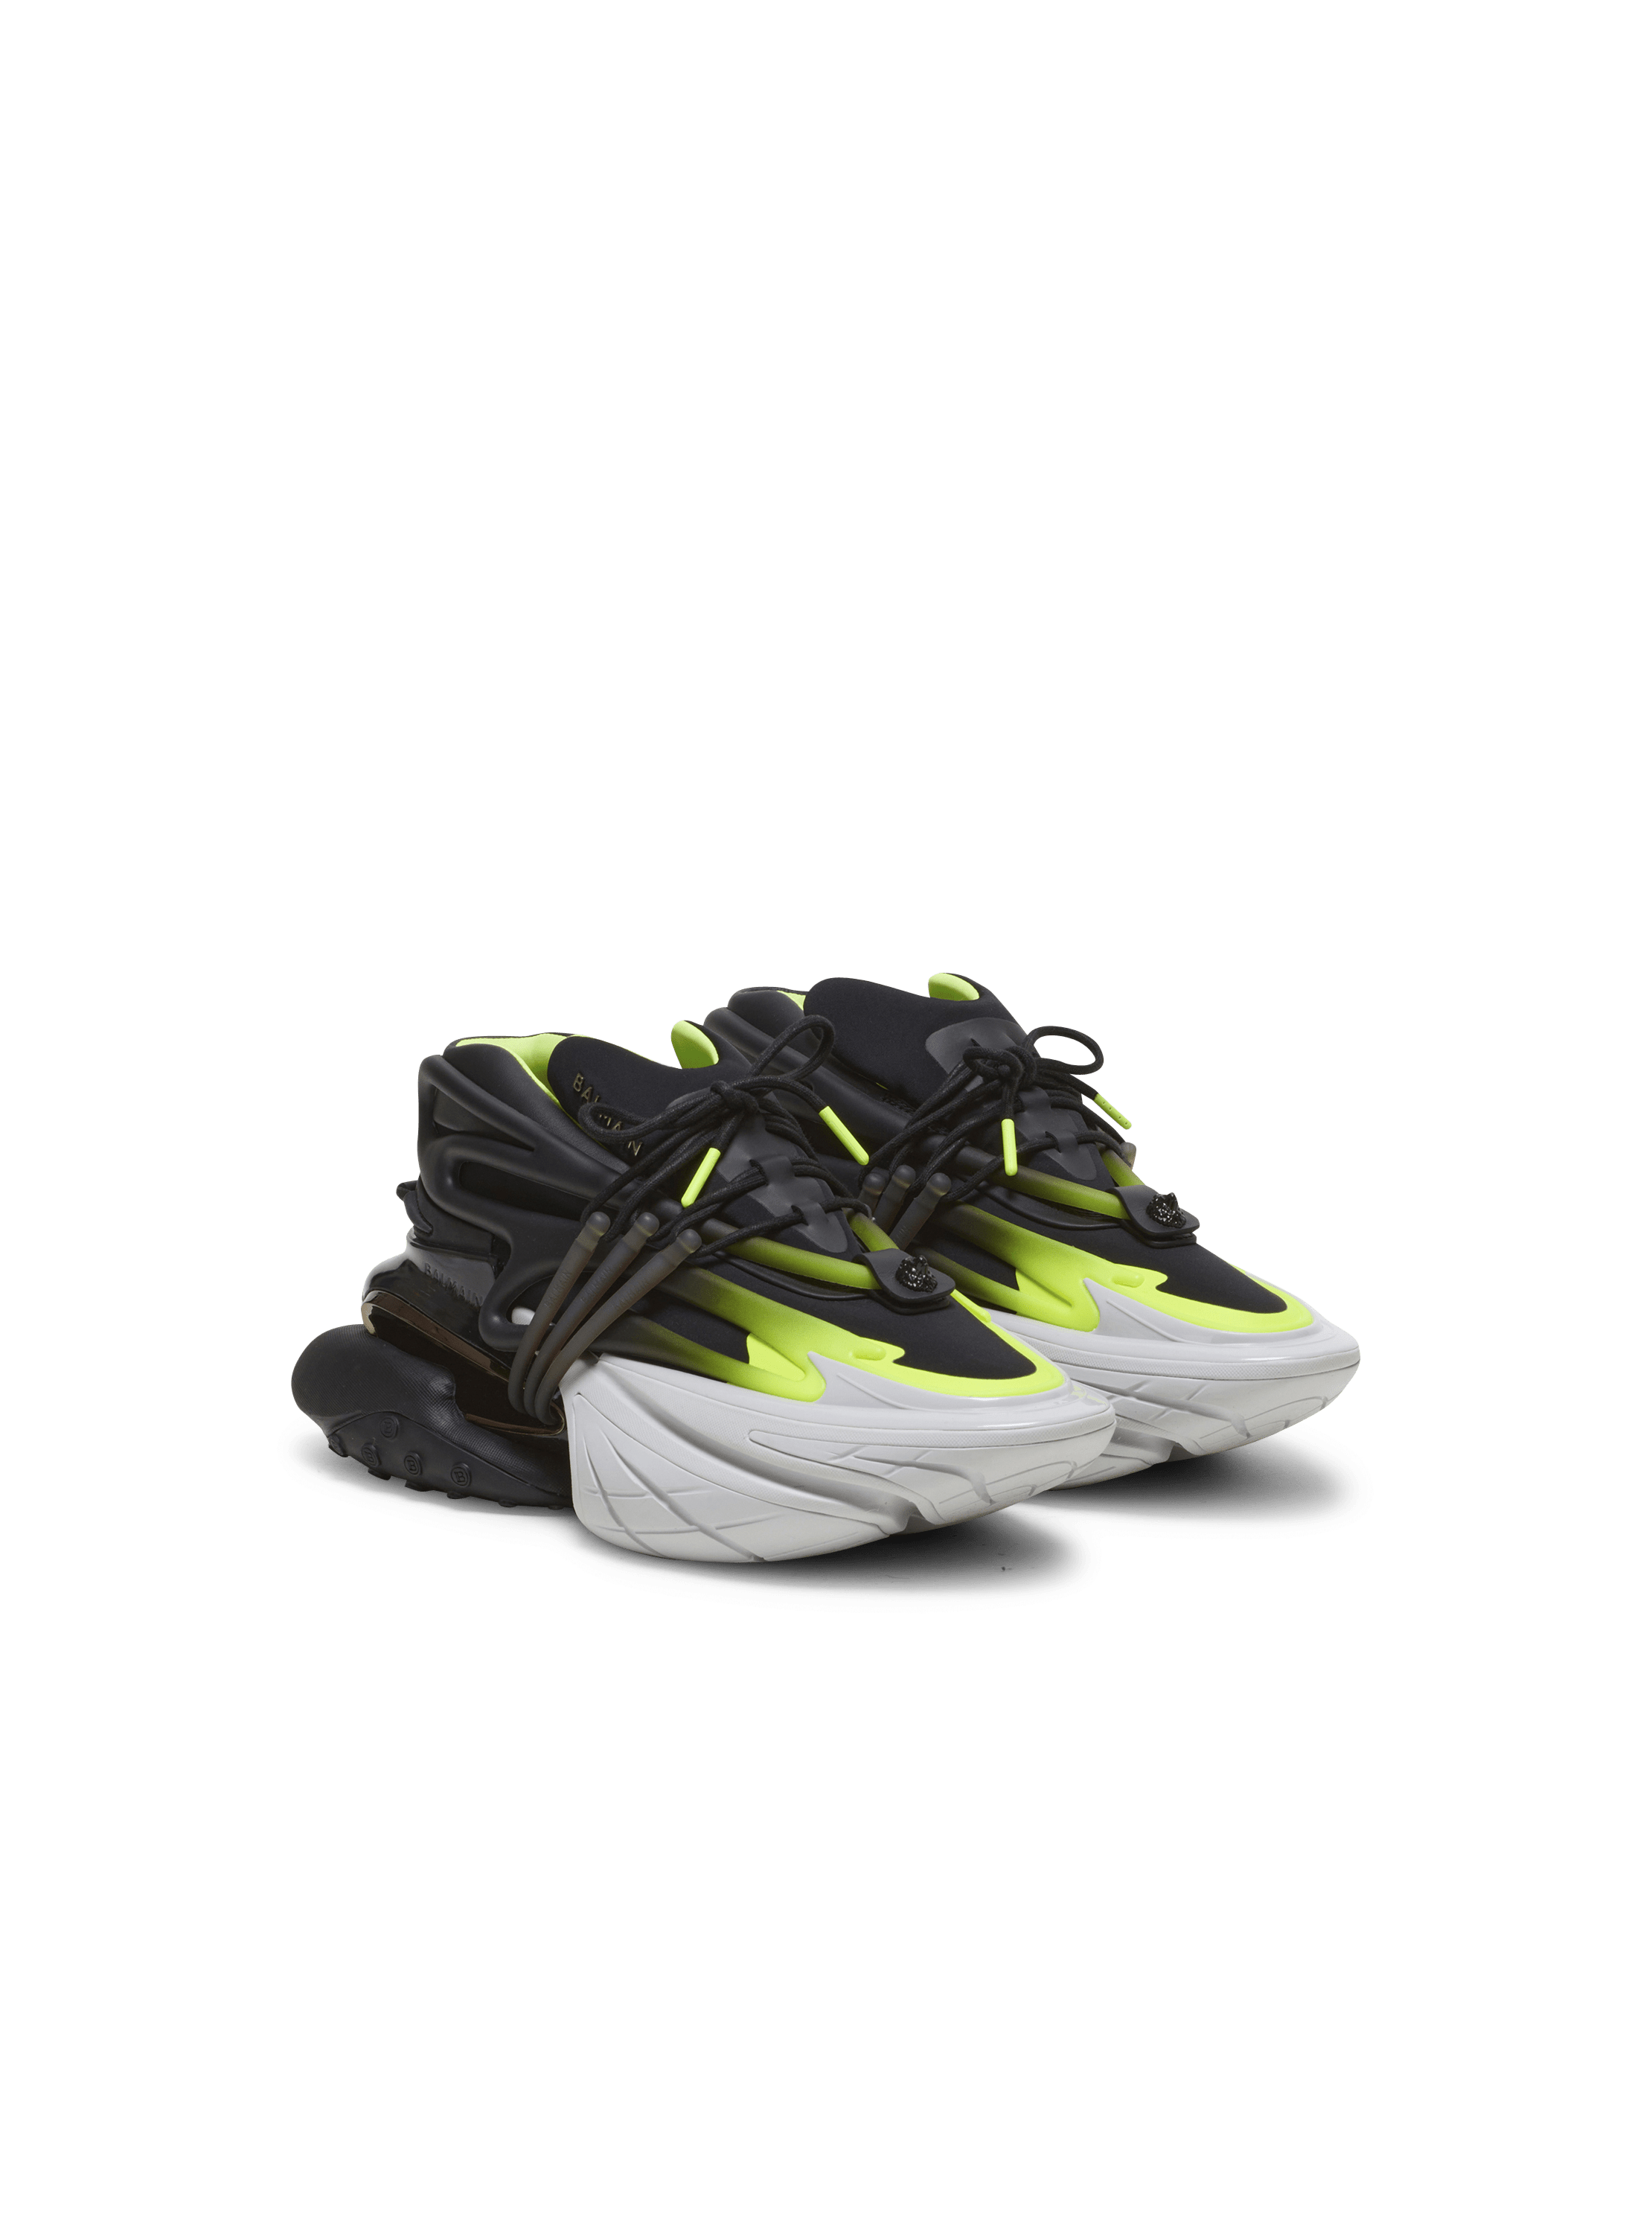 Balmain Black amp; Green Fluorescent Unicorn Sneakers